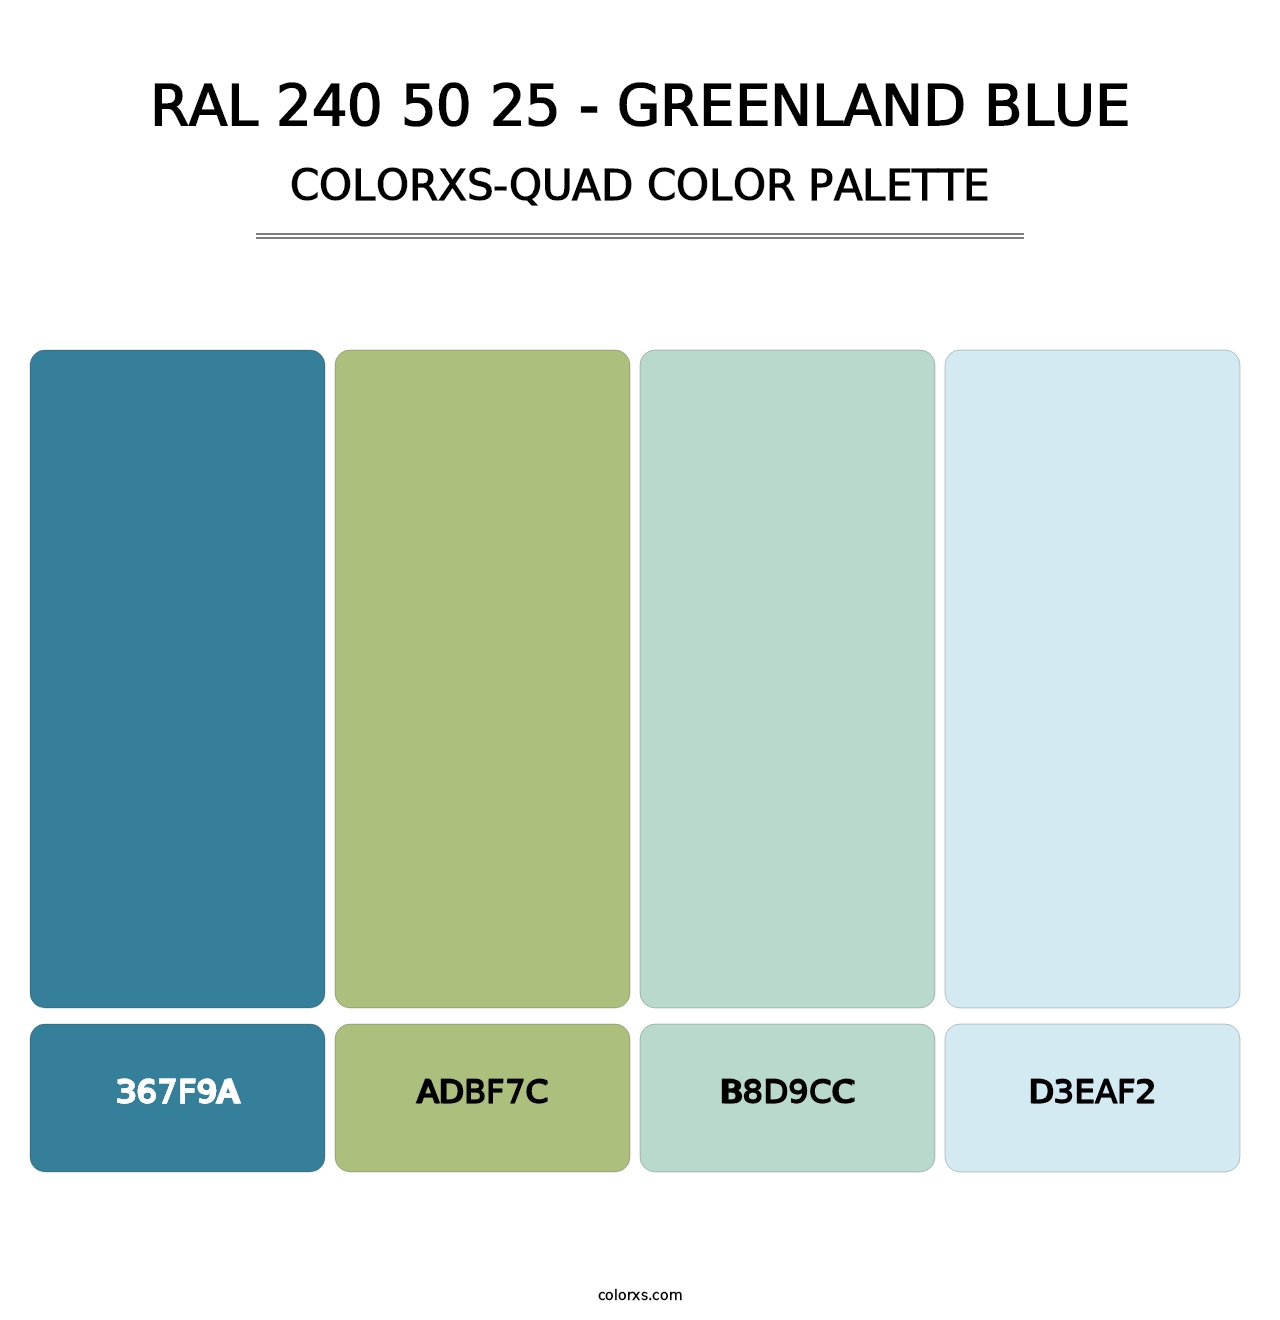 RAL 240 50 25 - Greenland Blue - Colorxs Quad Palette